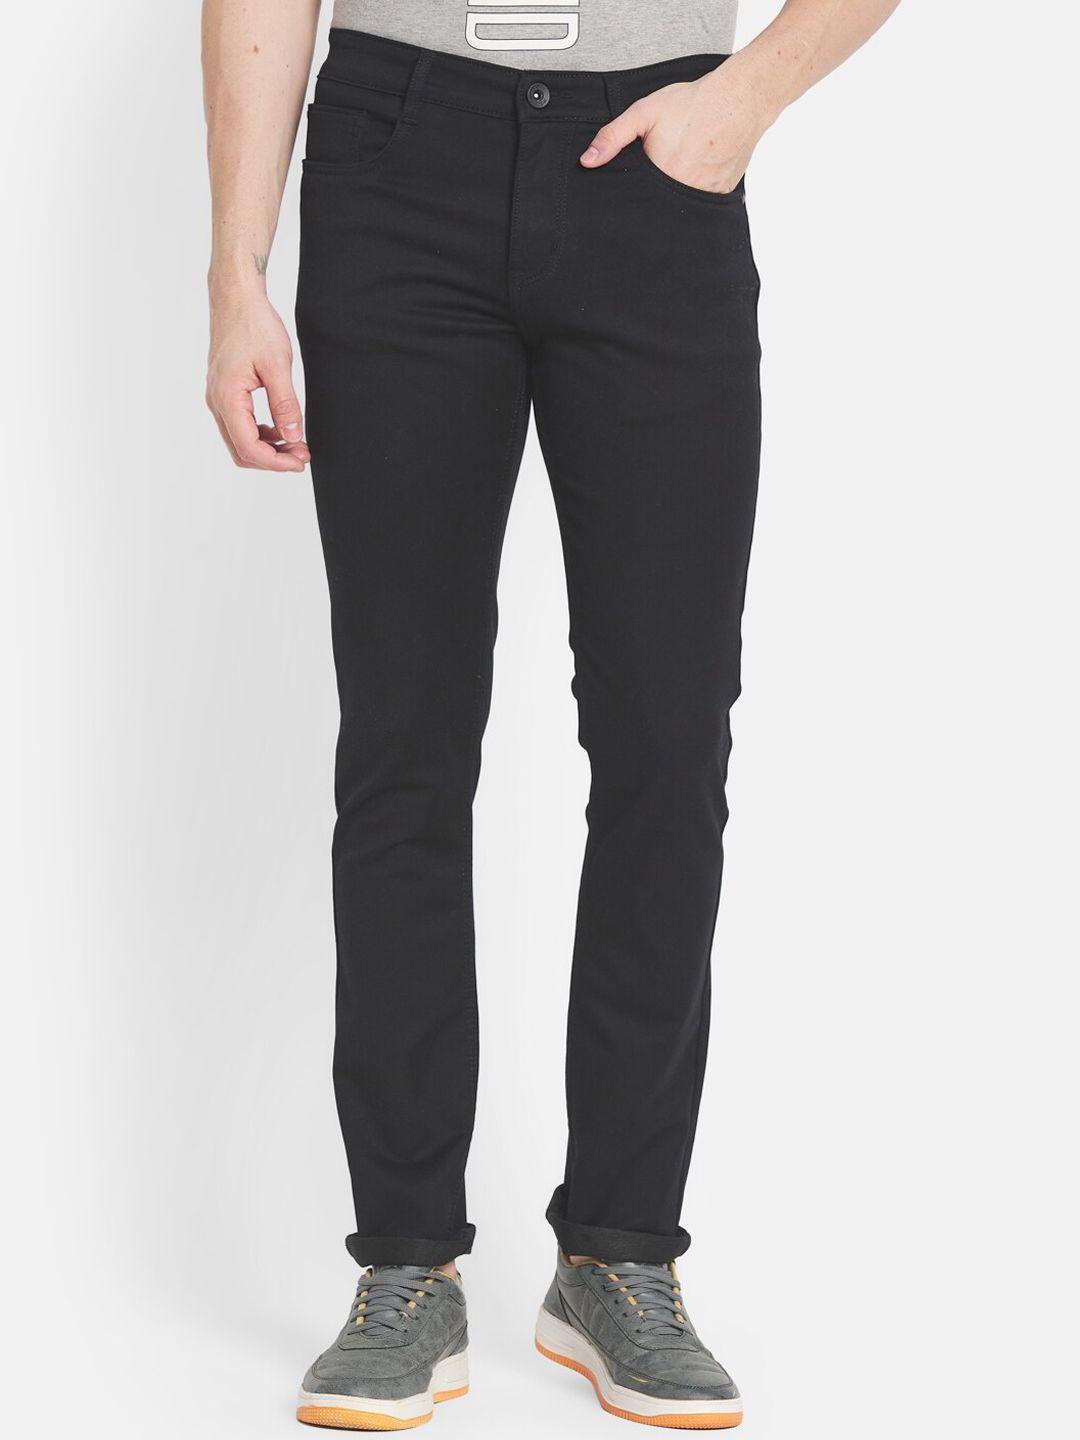 octave men black slim fit stretchable jeans